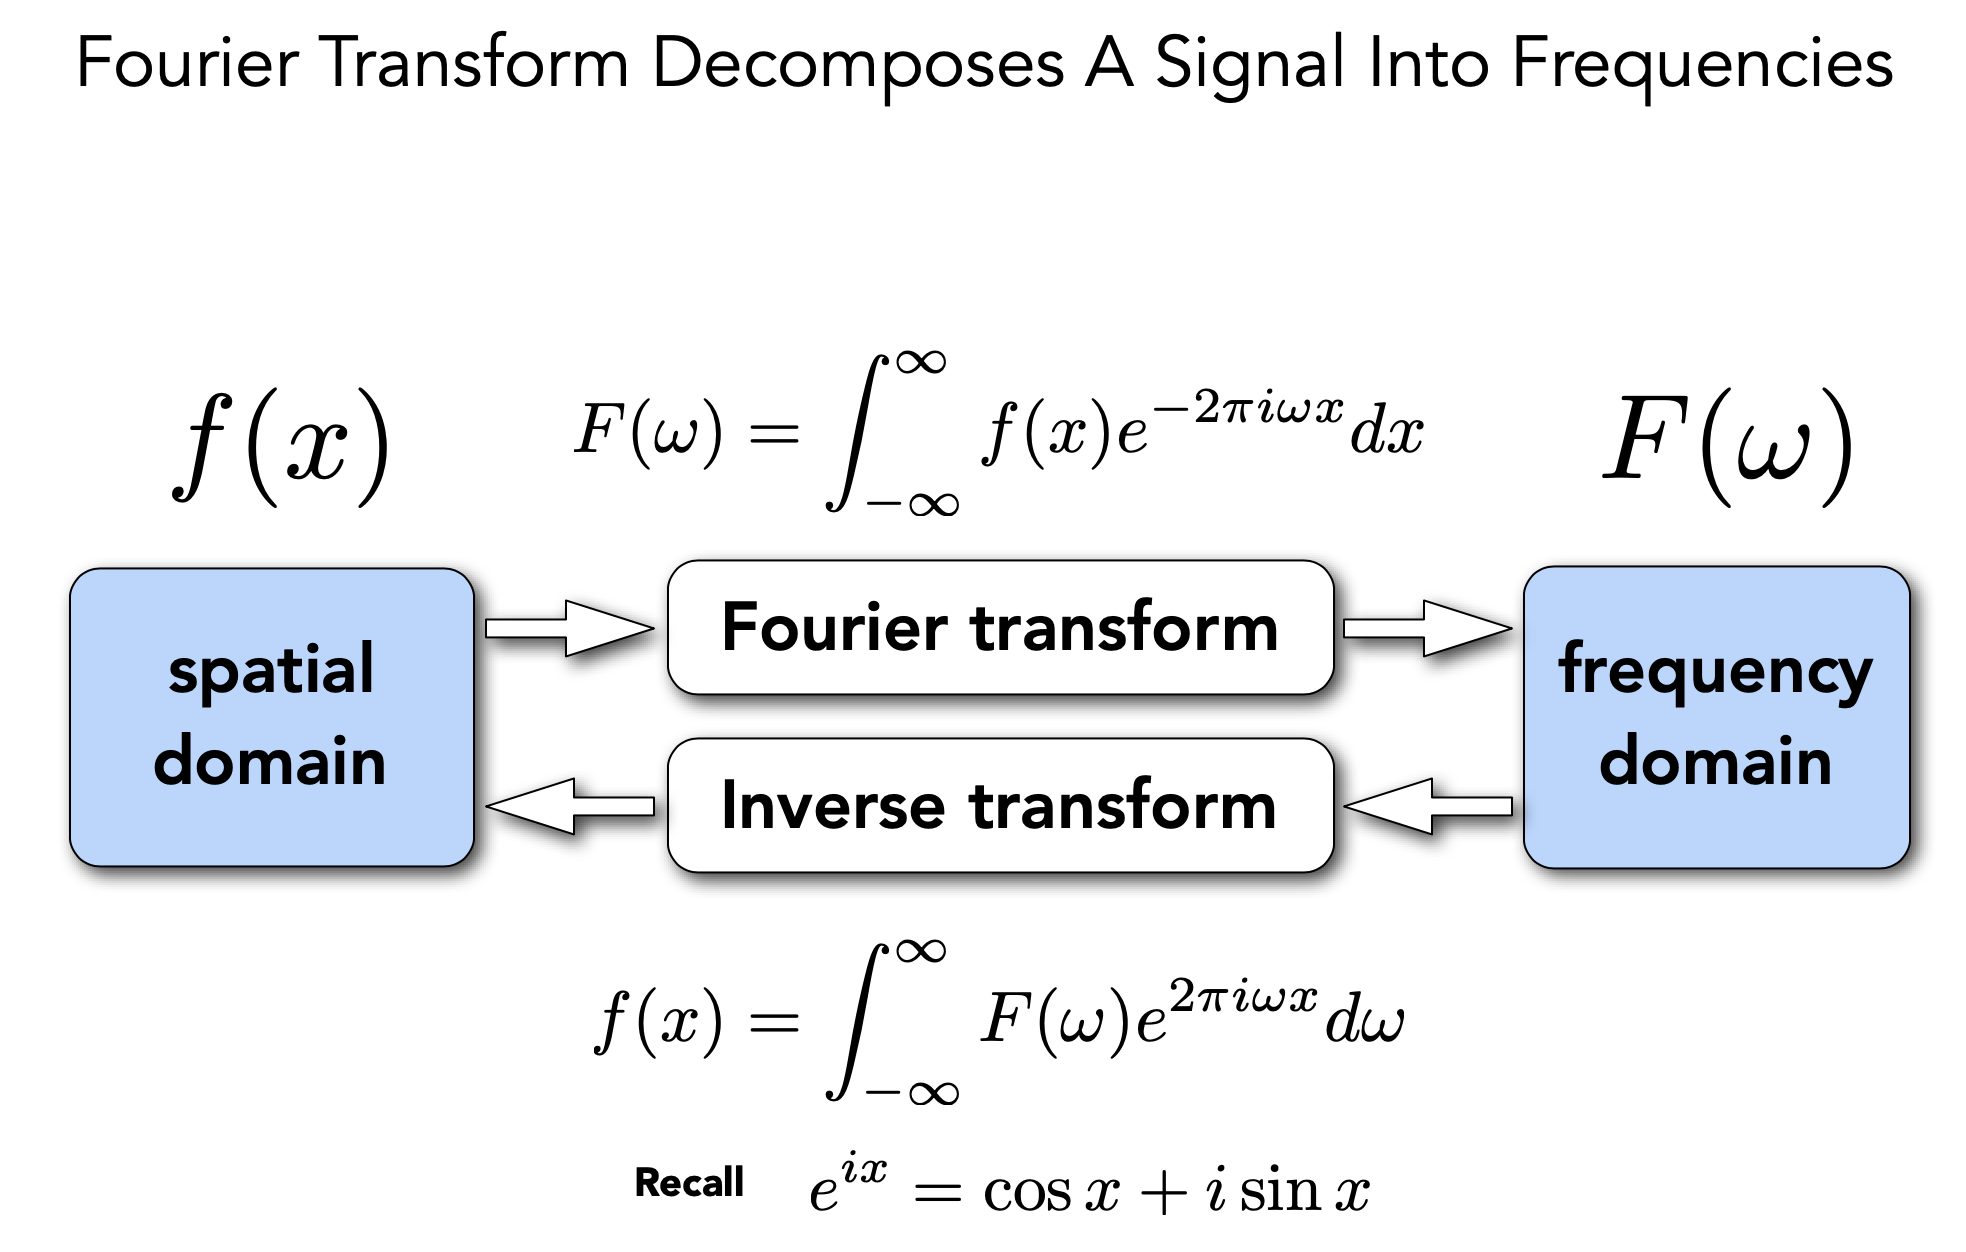 fourier Transform Decomposes A Signal into Frequencies